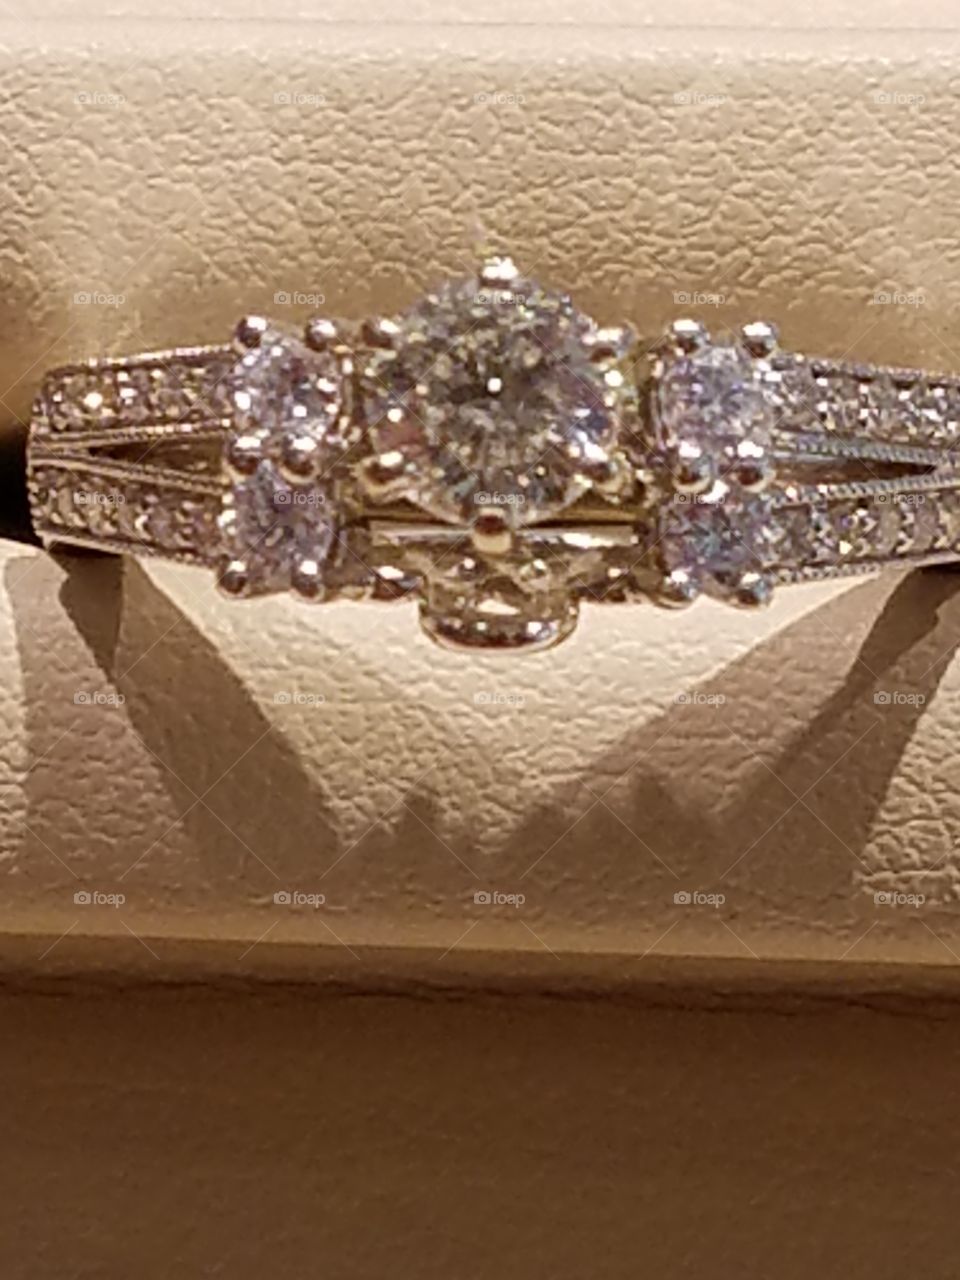 Beautiful wedding ring